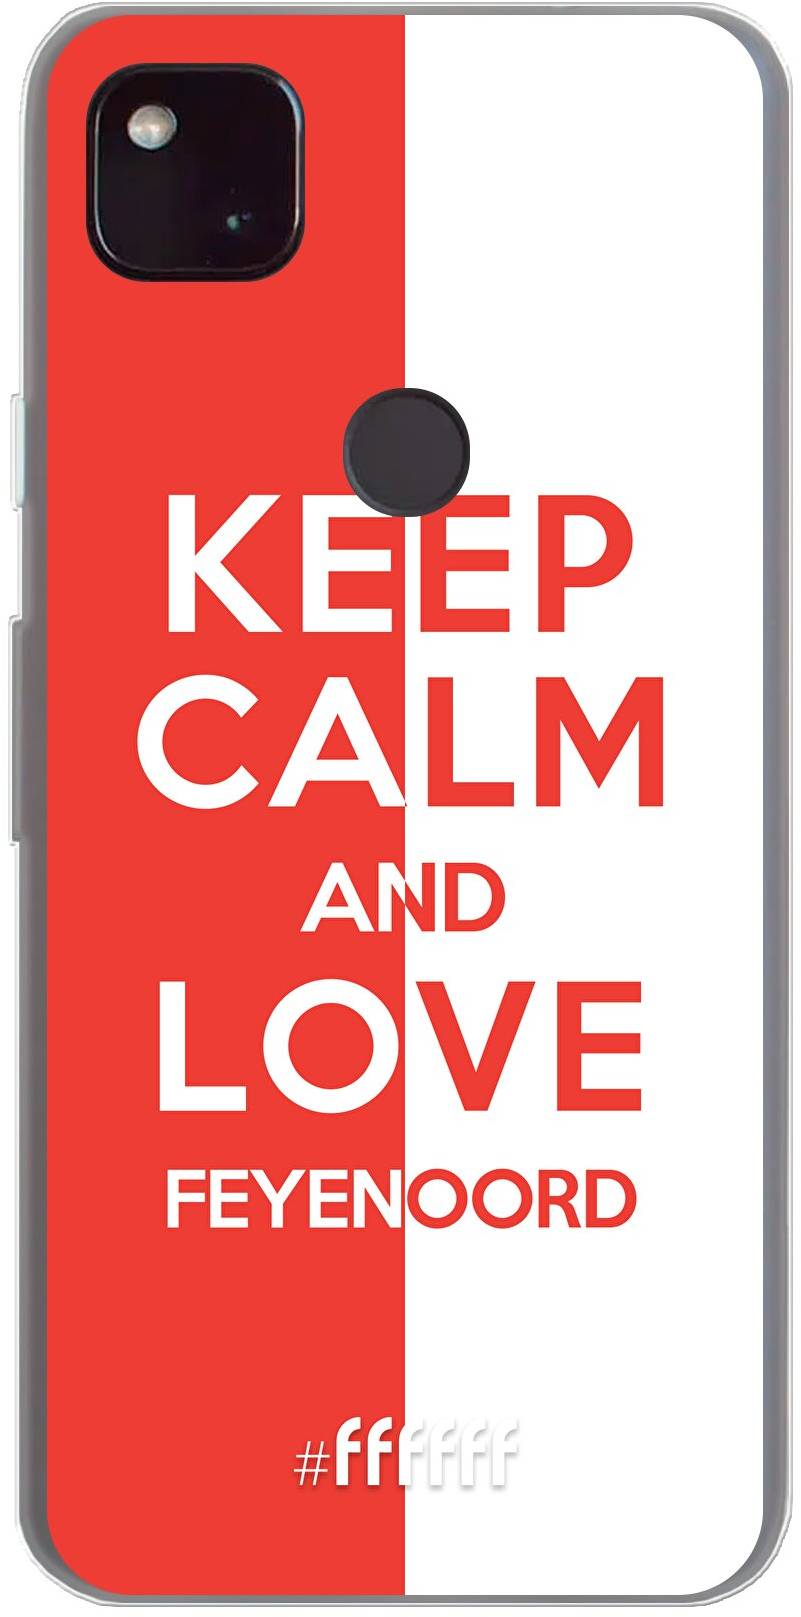 Feyenoord - Keep calm Pixel 4a 5G